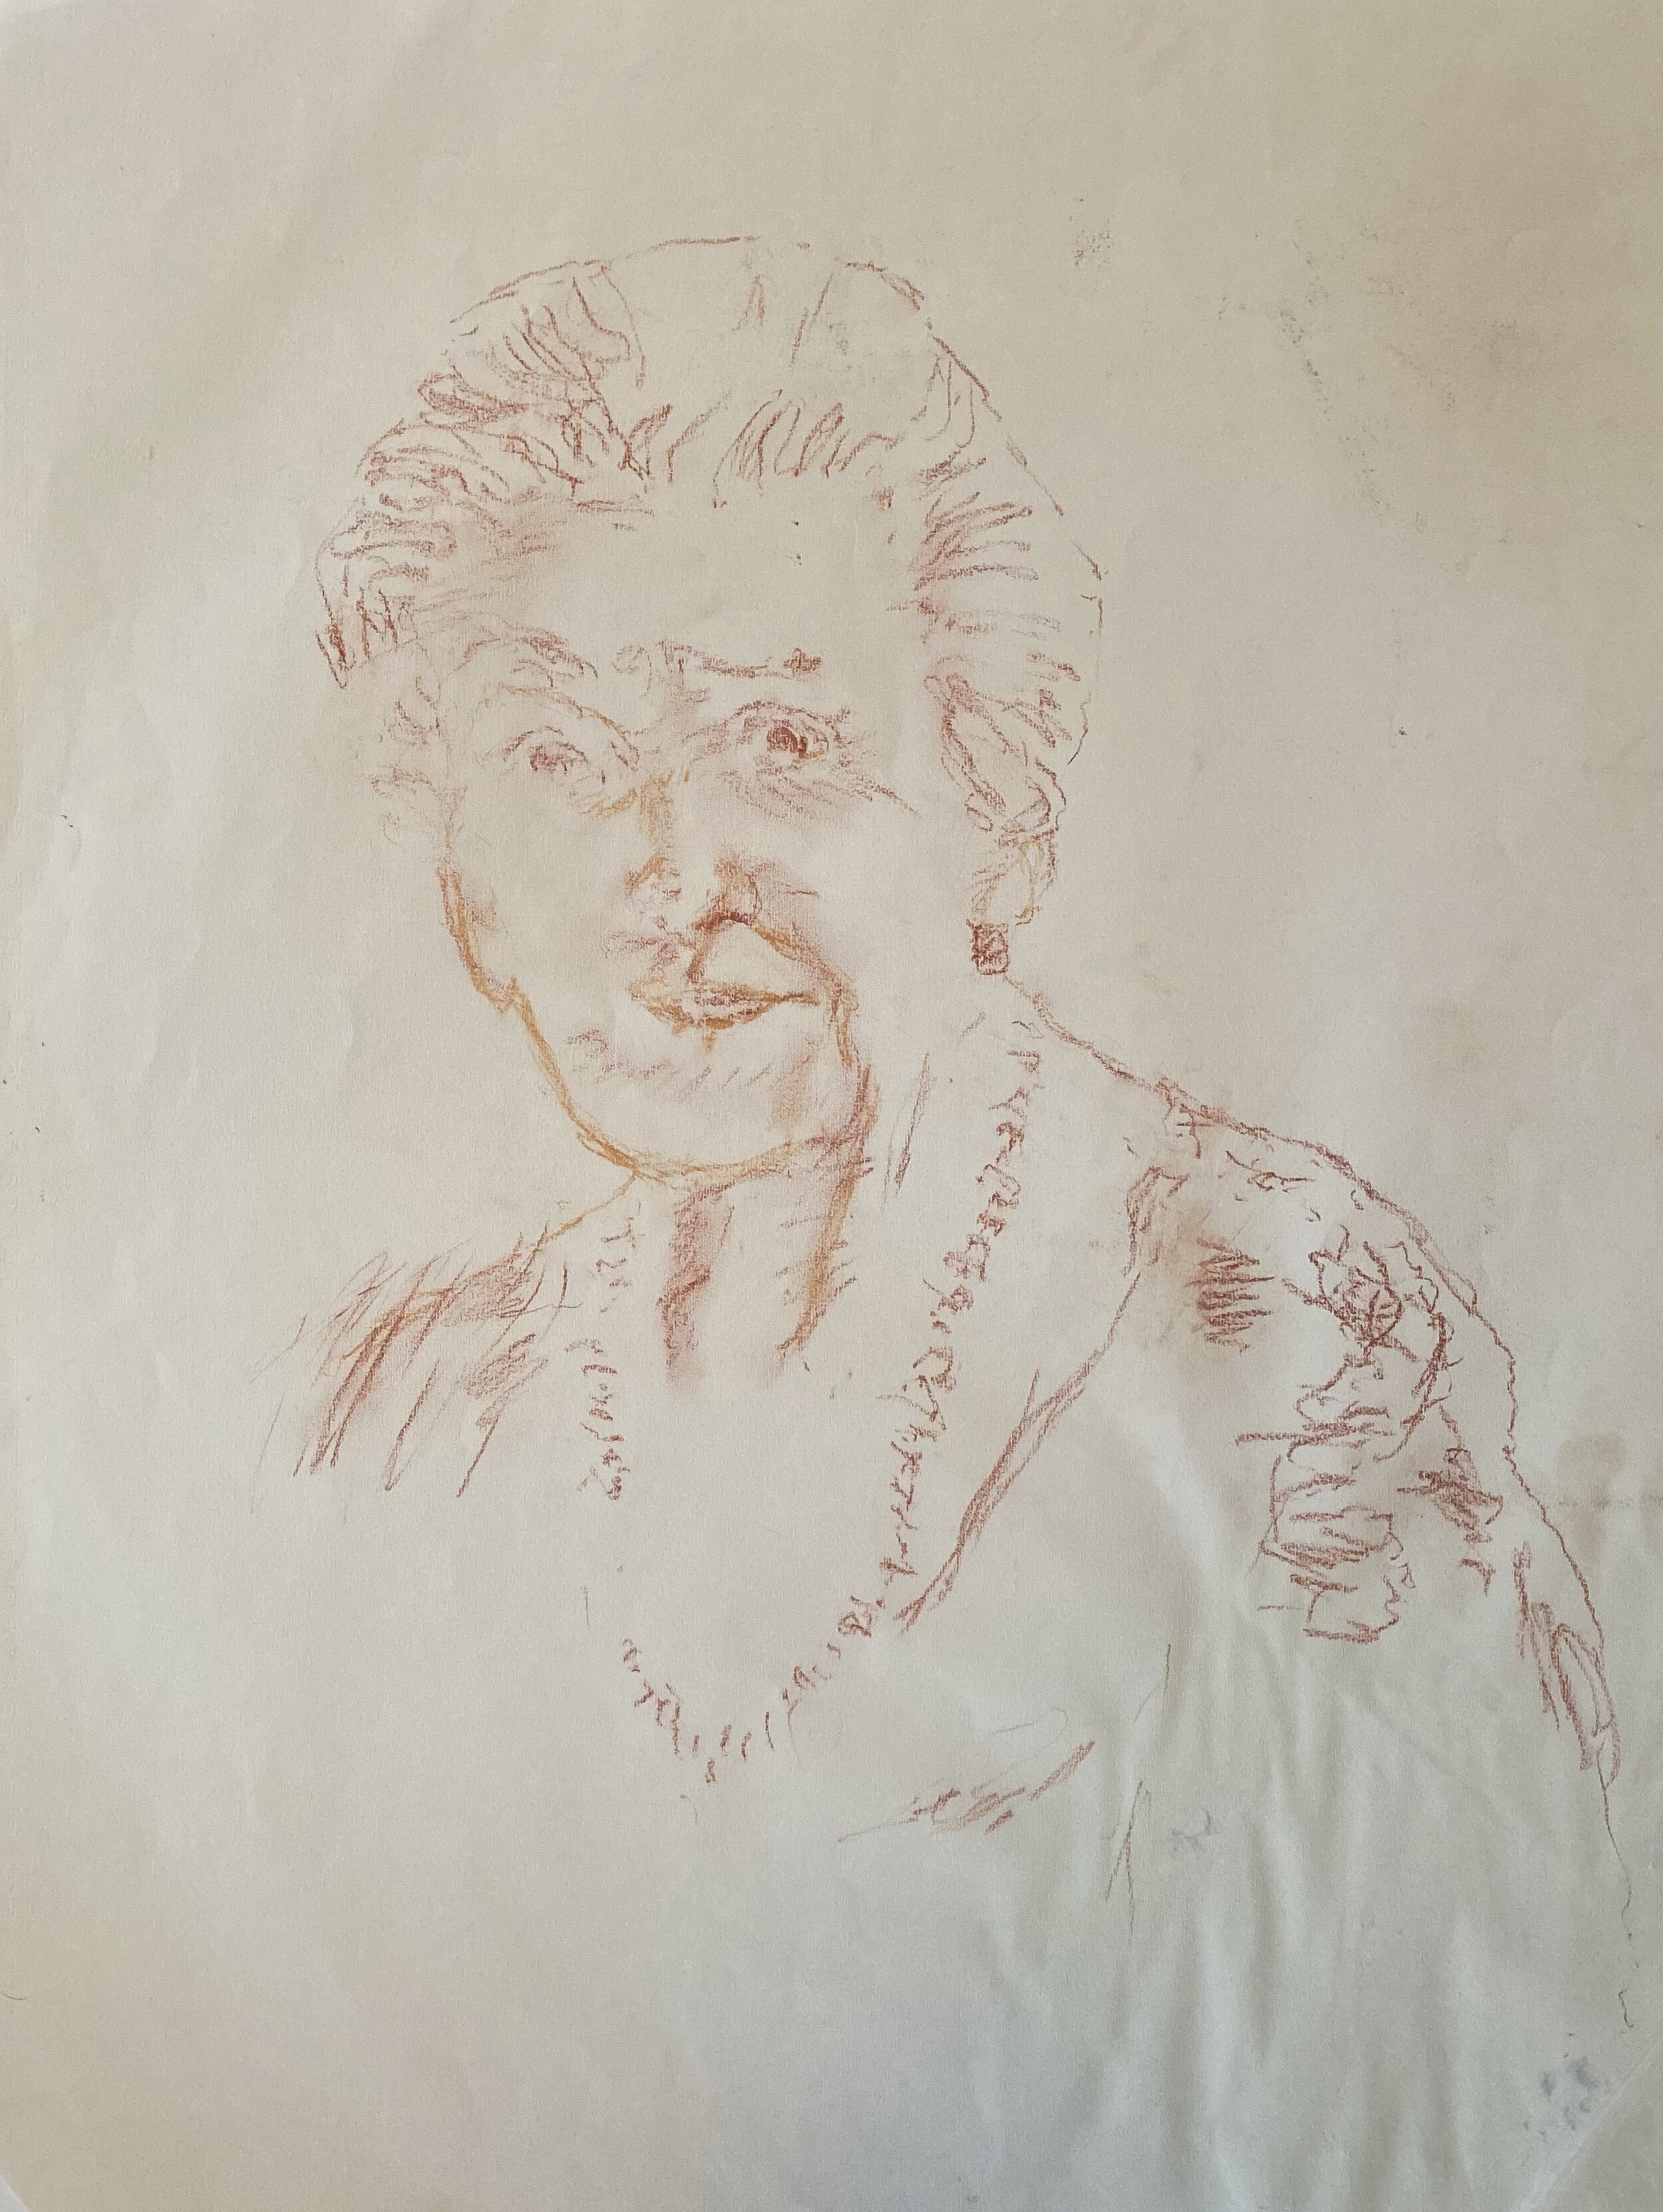   Description:   Portrait of older woman   Medium:   Pastel on paper   Dimensions:    H: 25.5 in   W: 19.5 in 